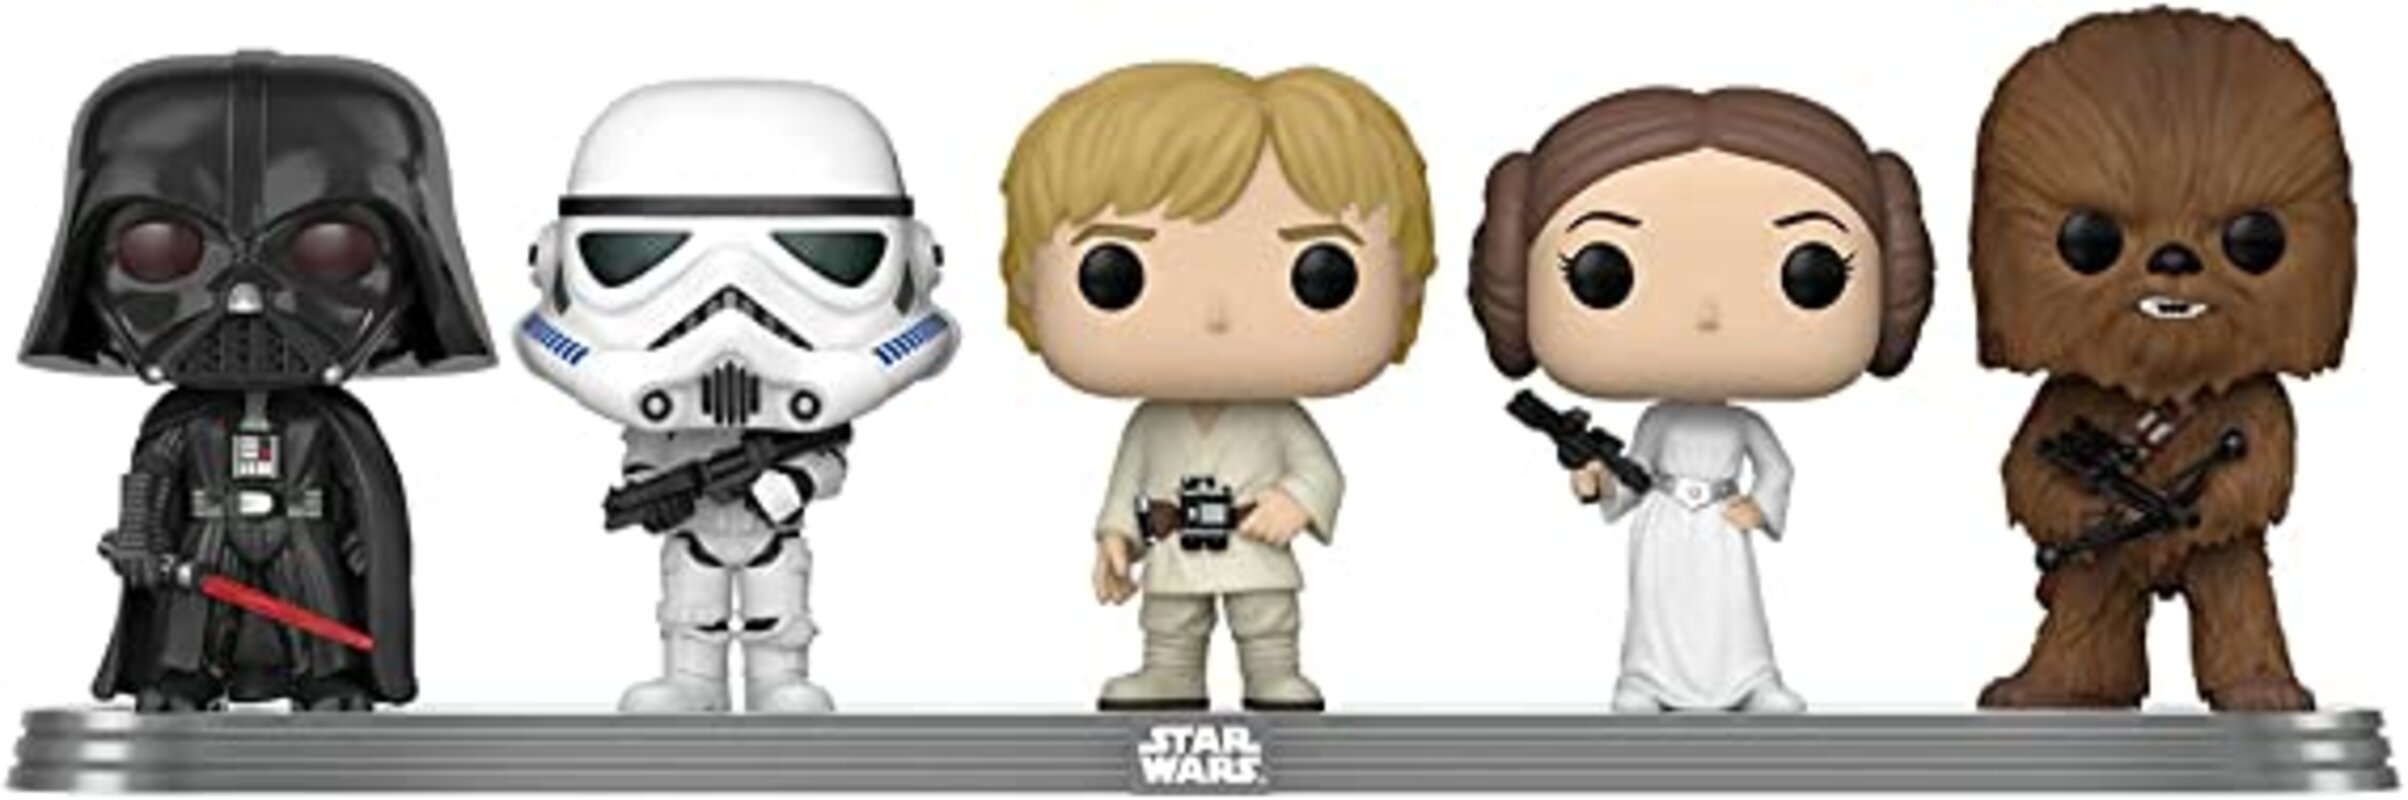 Exclusive Star Wars Chewbacca, Darth Vader, Luke Skywalker, Princess  Leia, & Stormtrooper Funko Pop! 5 Pack